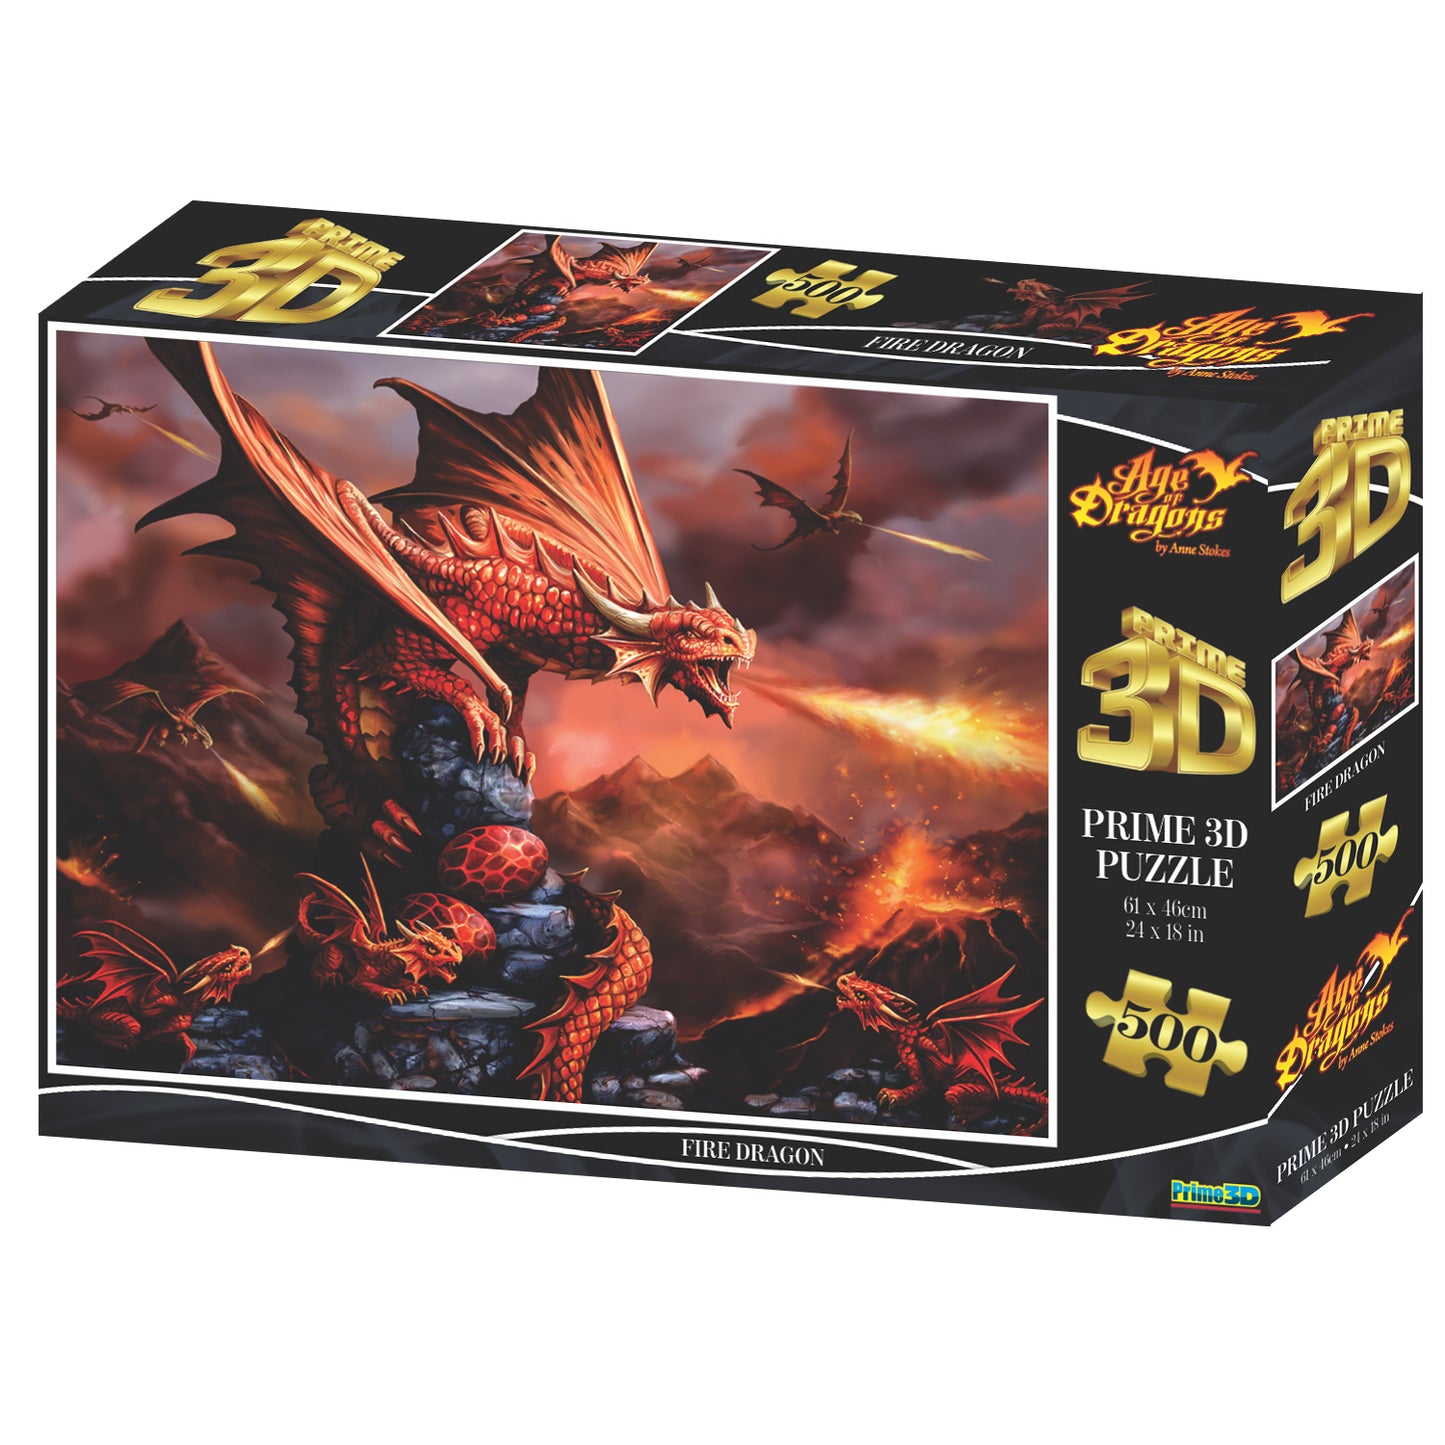 10090 | Fire Dragon Anne Stokes Prime 3D Jigsaw Puzzle 10090 500pc 24x18"